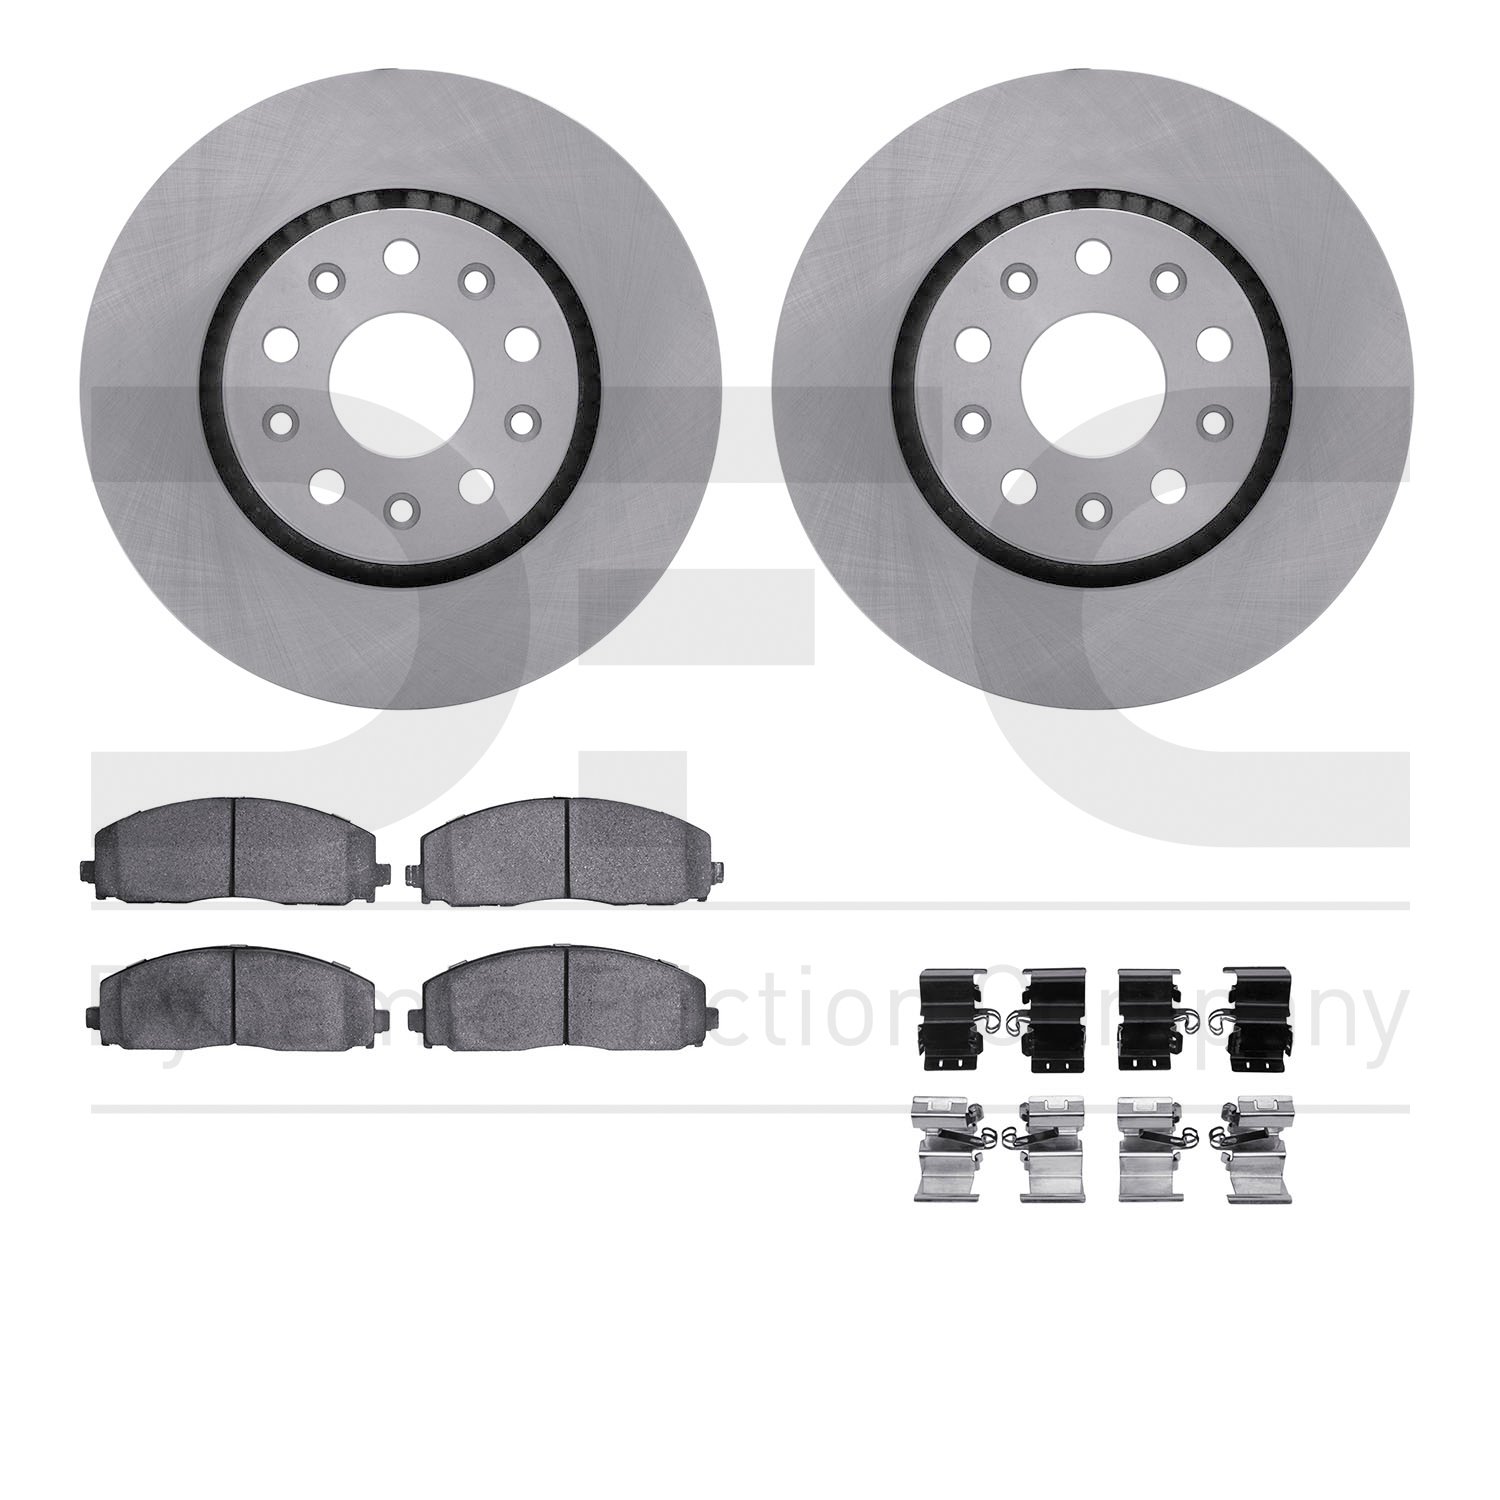 6412-42130 Brake Rotors with Ultimate-Duty Brake Pads Kit & Hardware, Fits Select Mopar, Position: Front